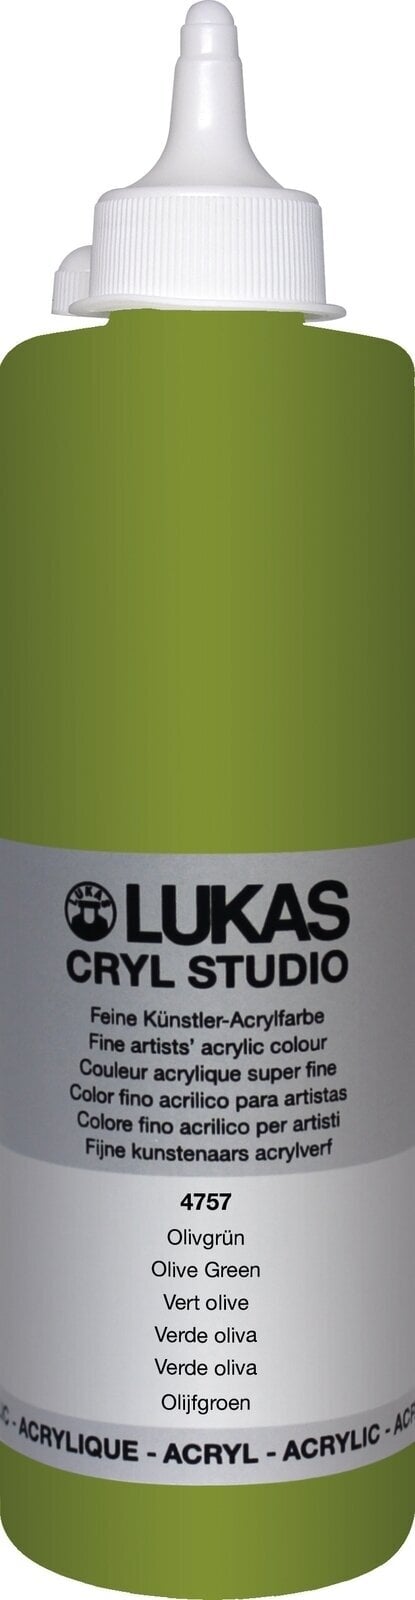 Acrylic Paint Lukas Cryl Studio Acrylic Paint Plastic Bottle Acrylic Paint Olive Green 500 ml 1 pc